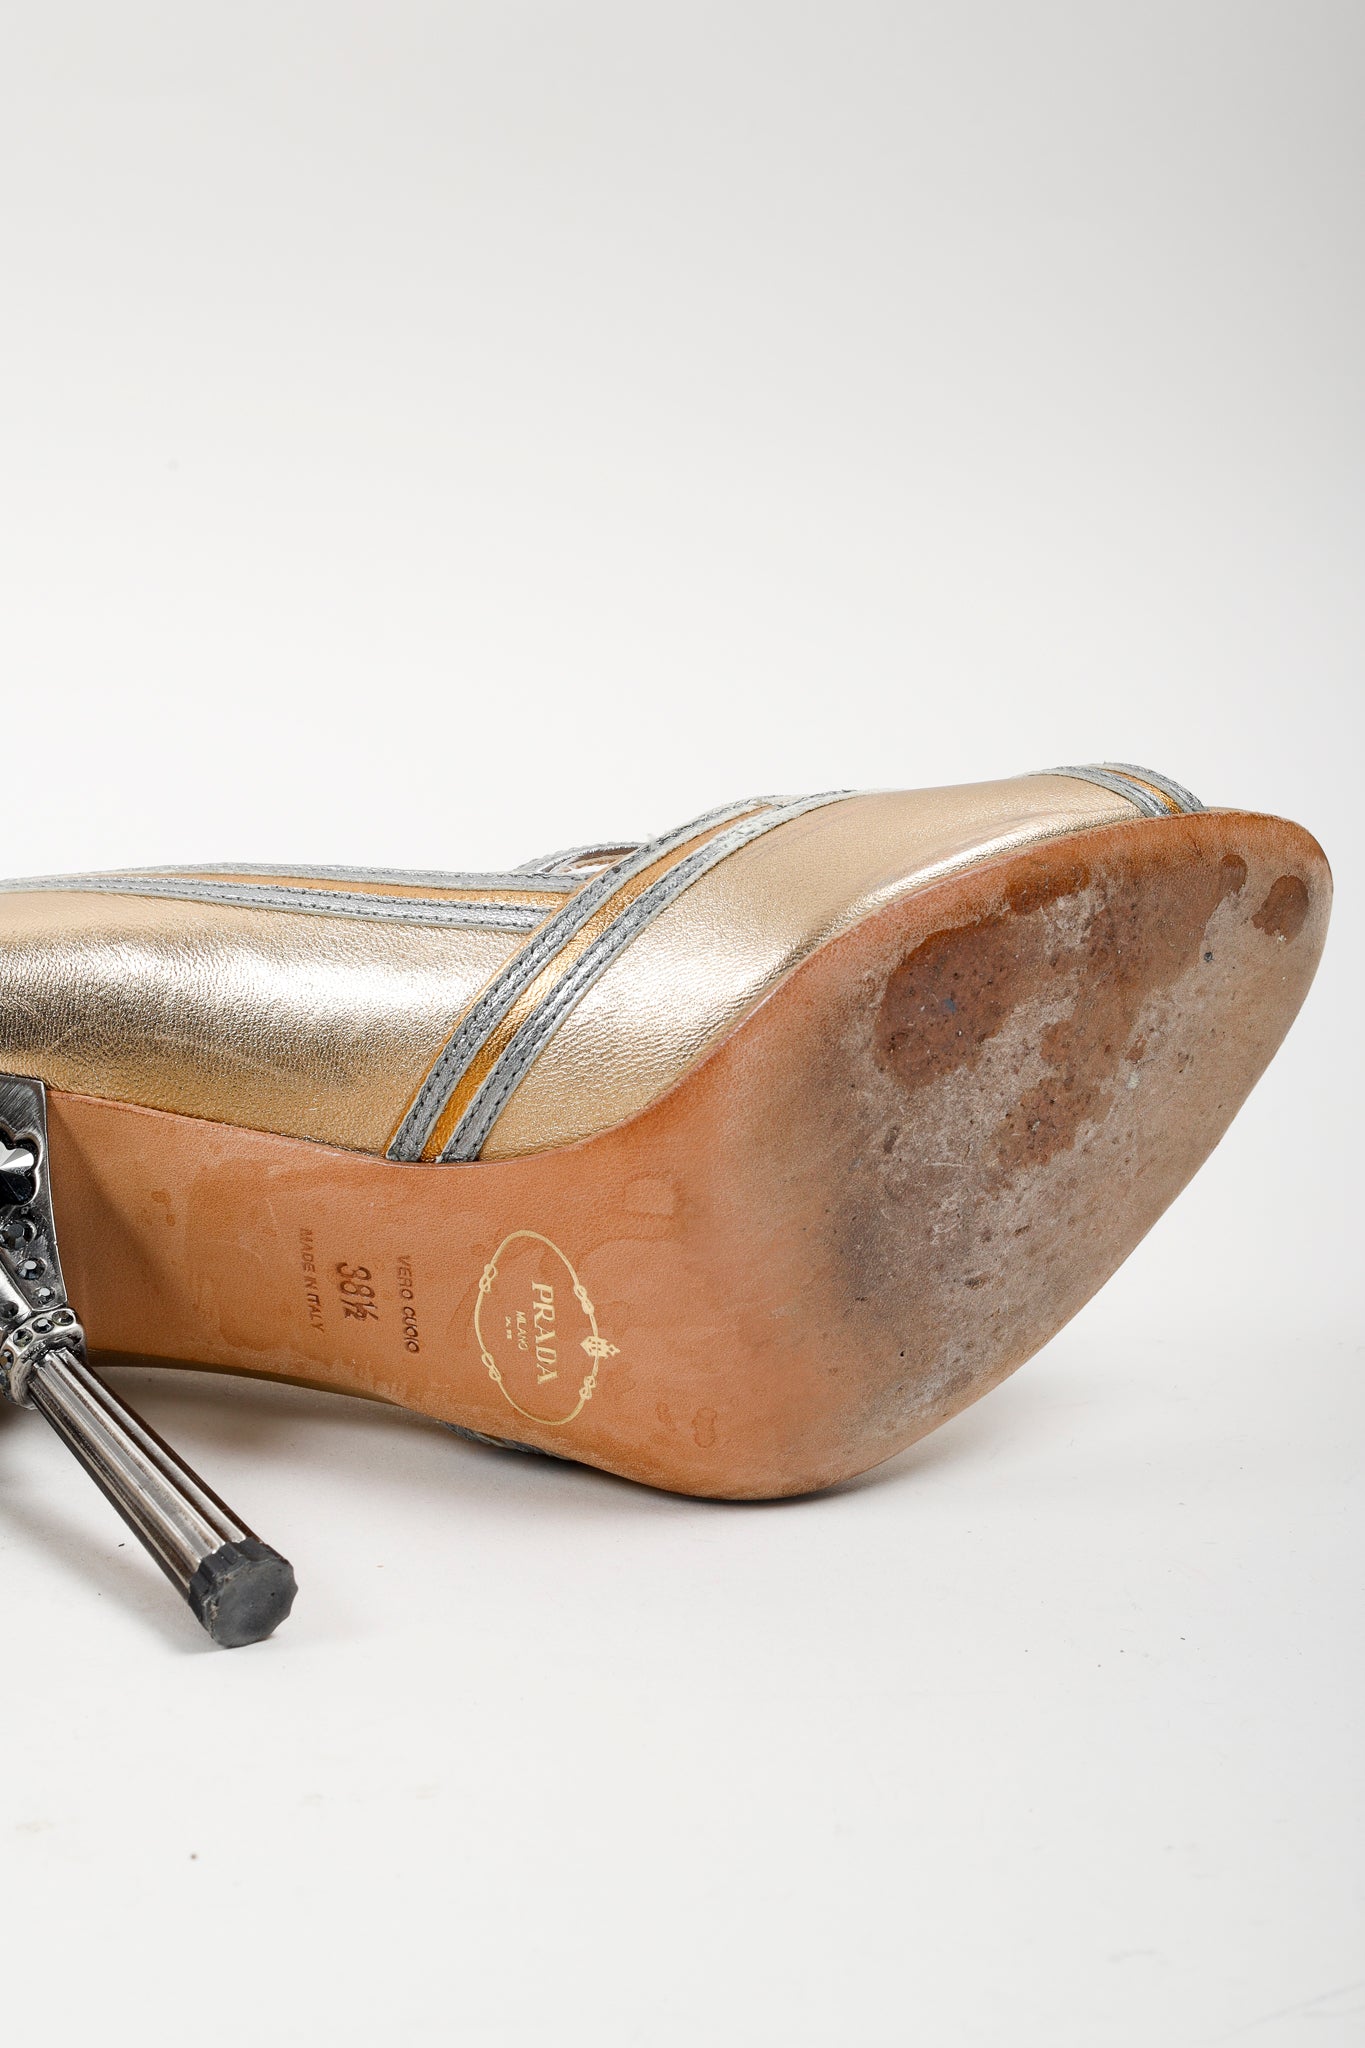 Prada Gold & Silver Mary Jane Embellished Heel Open-Toe Pumps